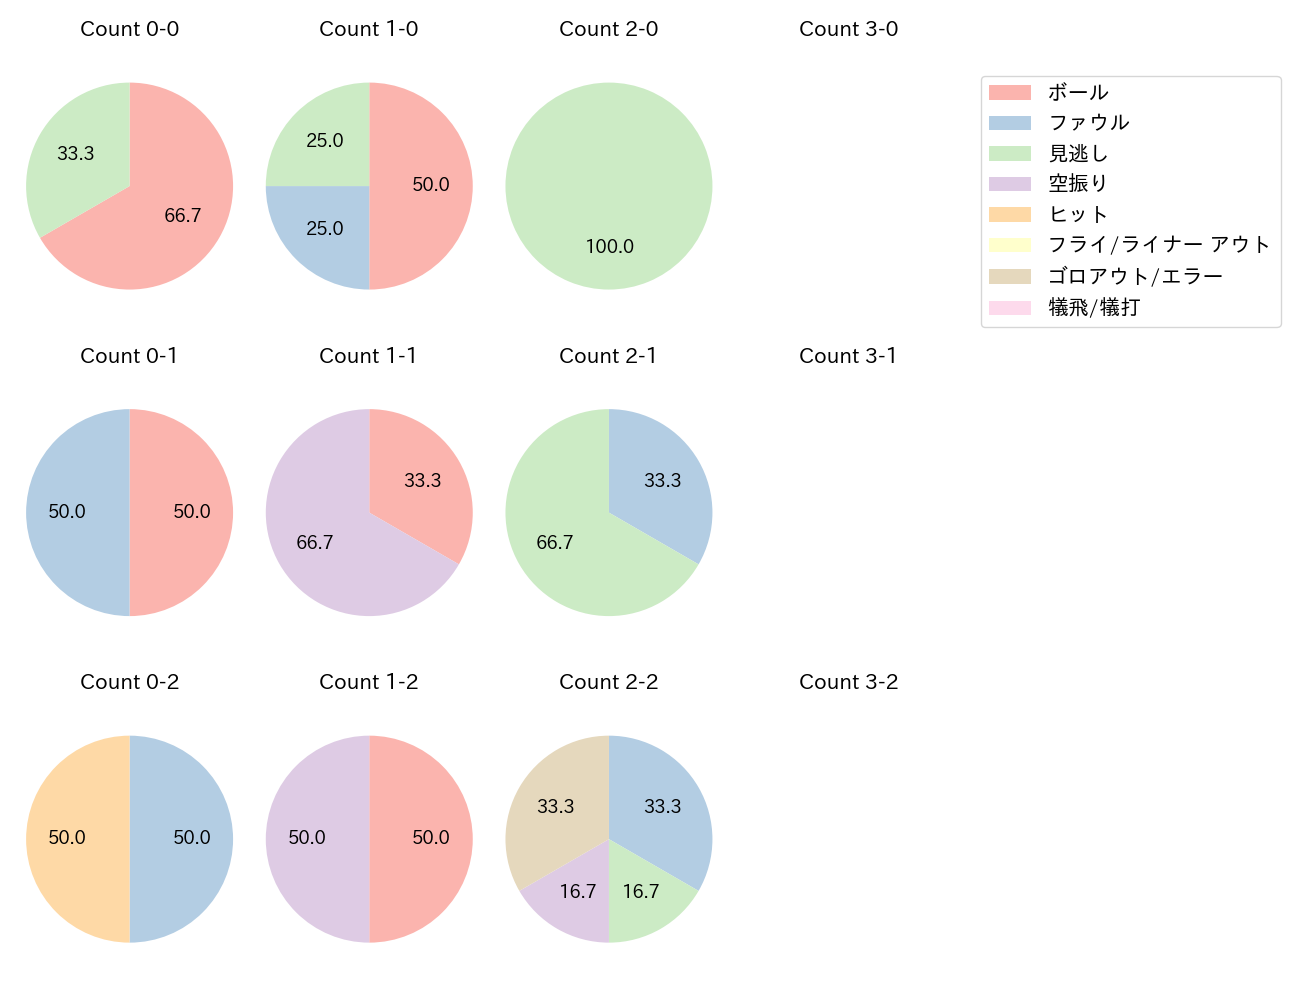 勝野 昌慶の球数分布(2021年6月)